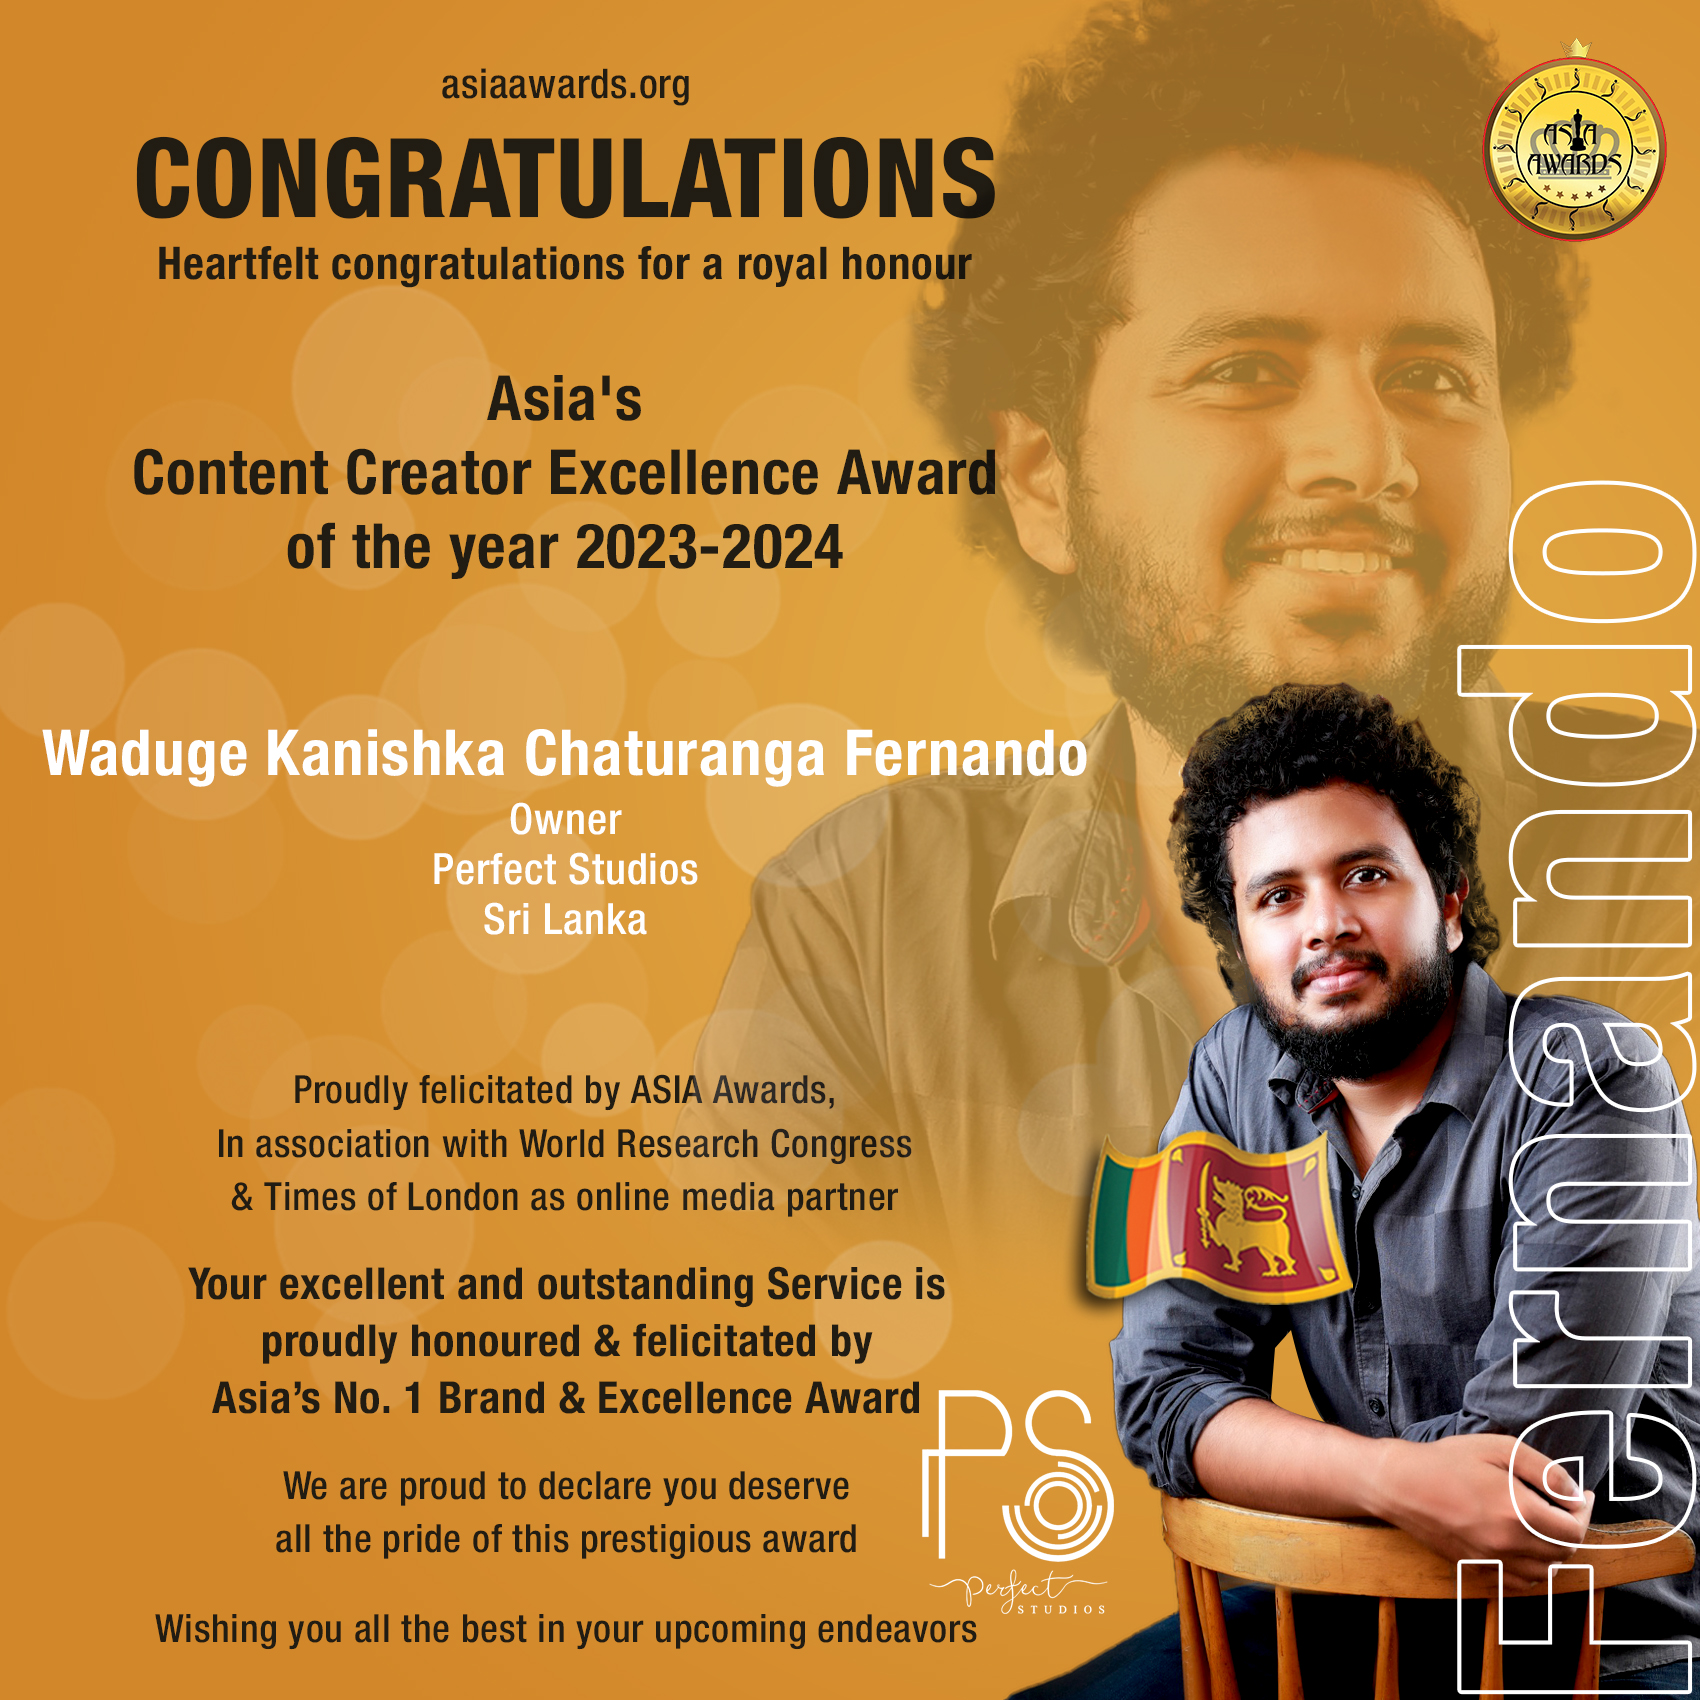 Waduge Kanishka Chaturanga Fernando Has Won Asia's Content Creator Excellence Award